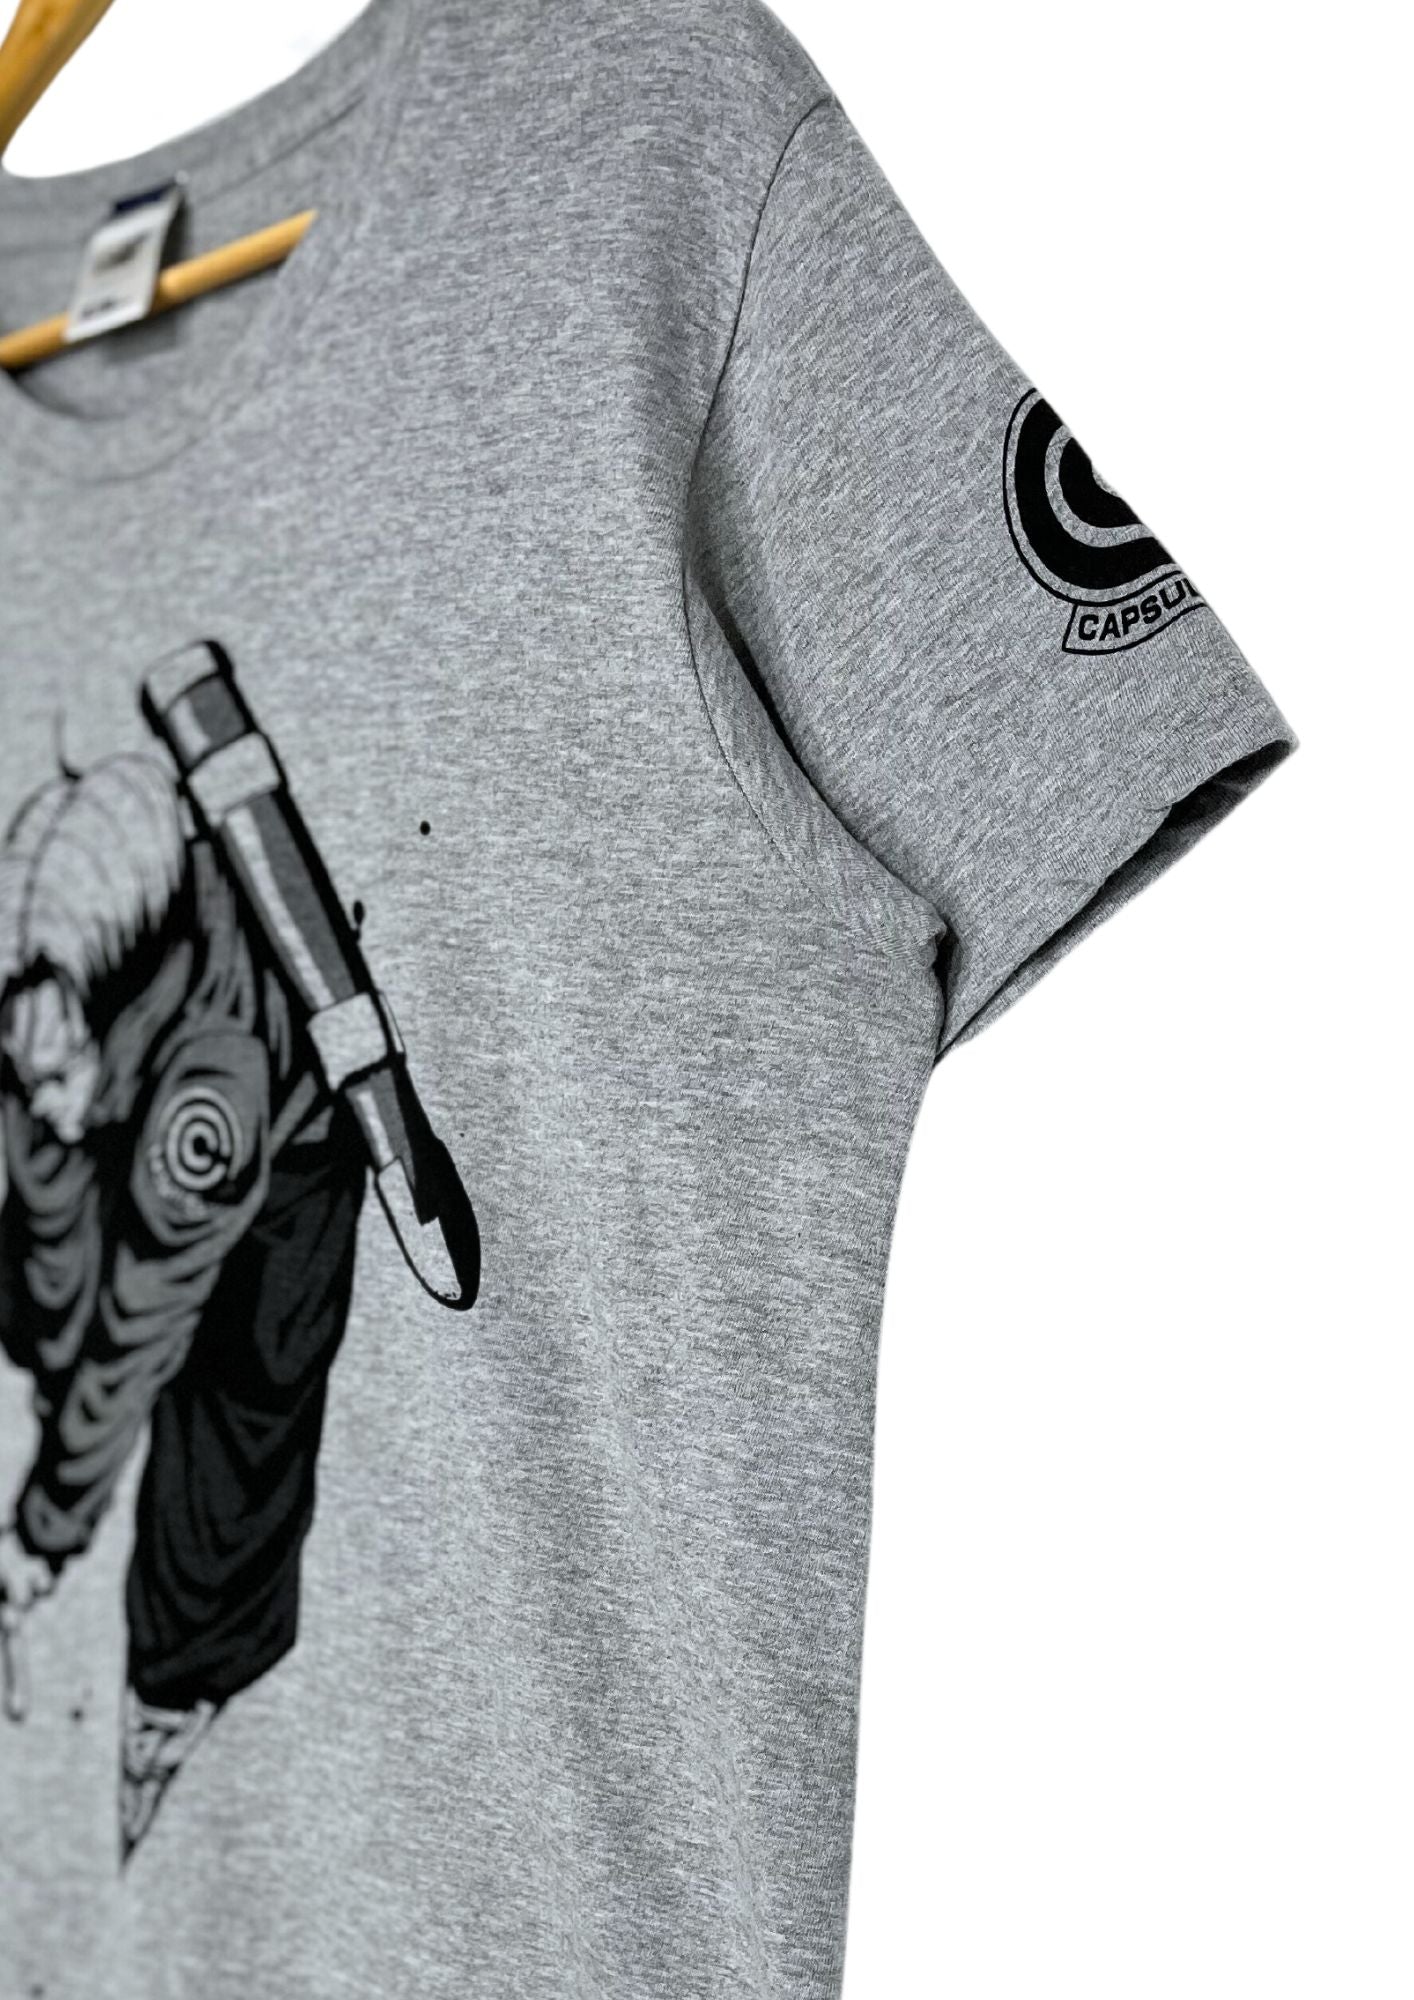 Dragon Ball Z Kai x COSPA Trunks T-shirt